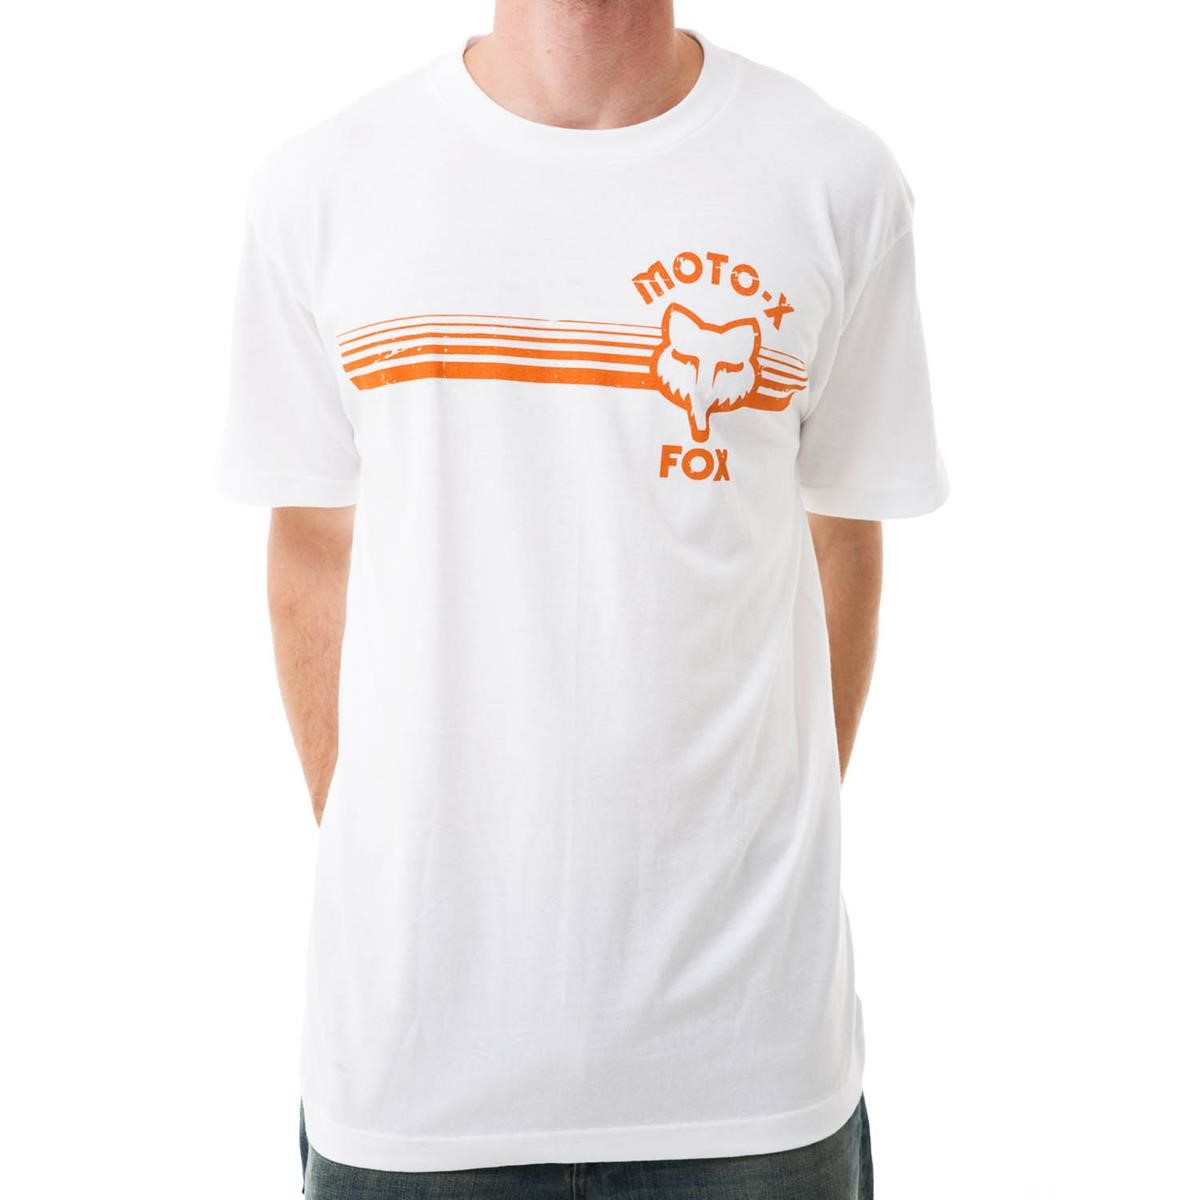 Freizeit/Streetwear Bekleidung-T-Shirts/Polos - Fox T-Shirt Liberty White